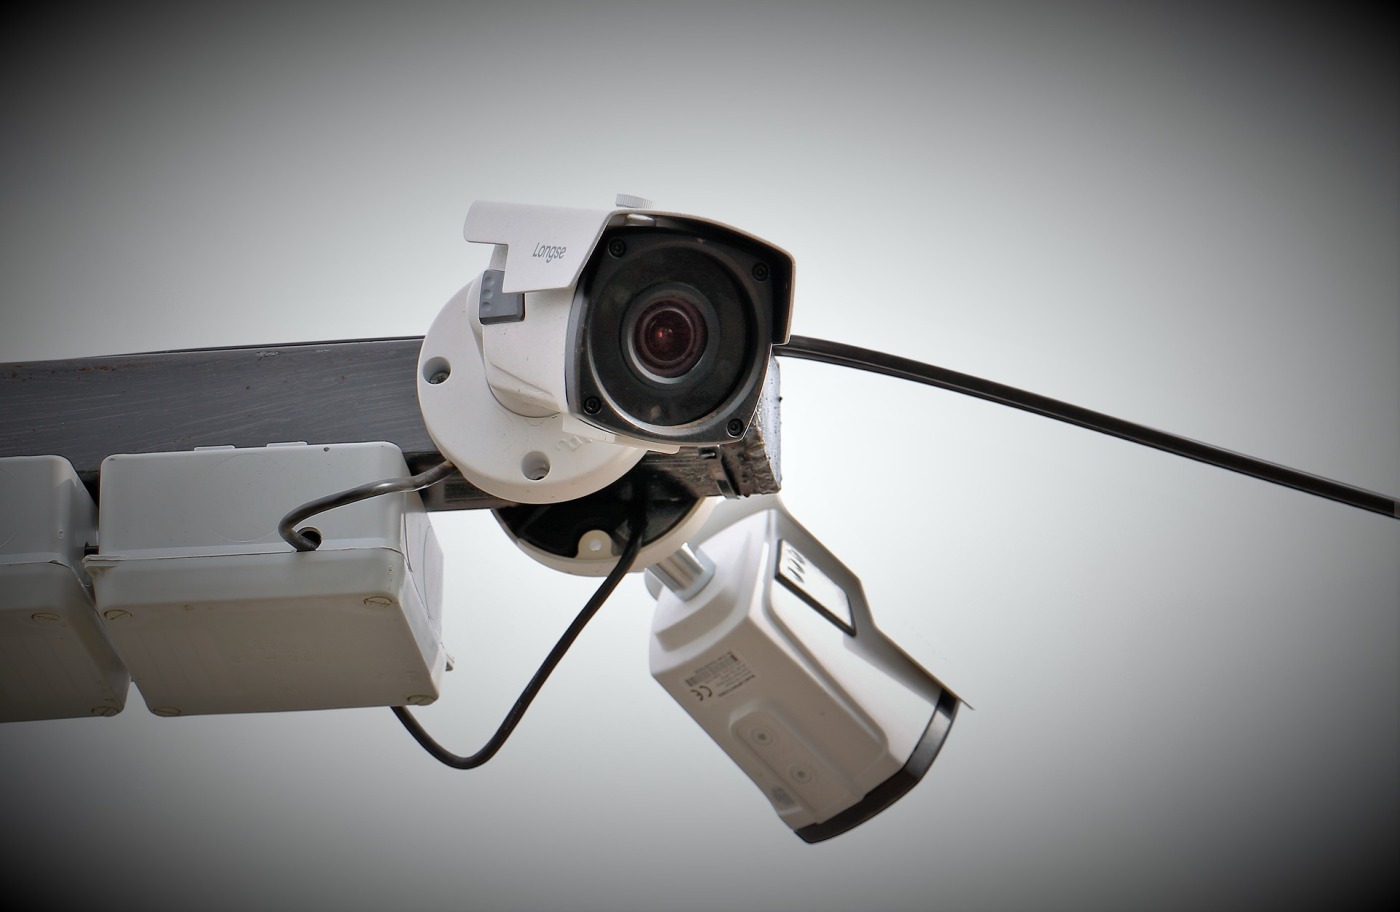 CCTV camera security system